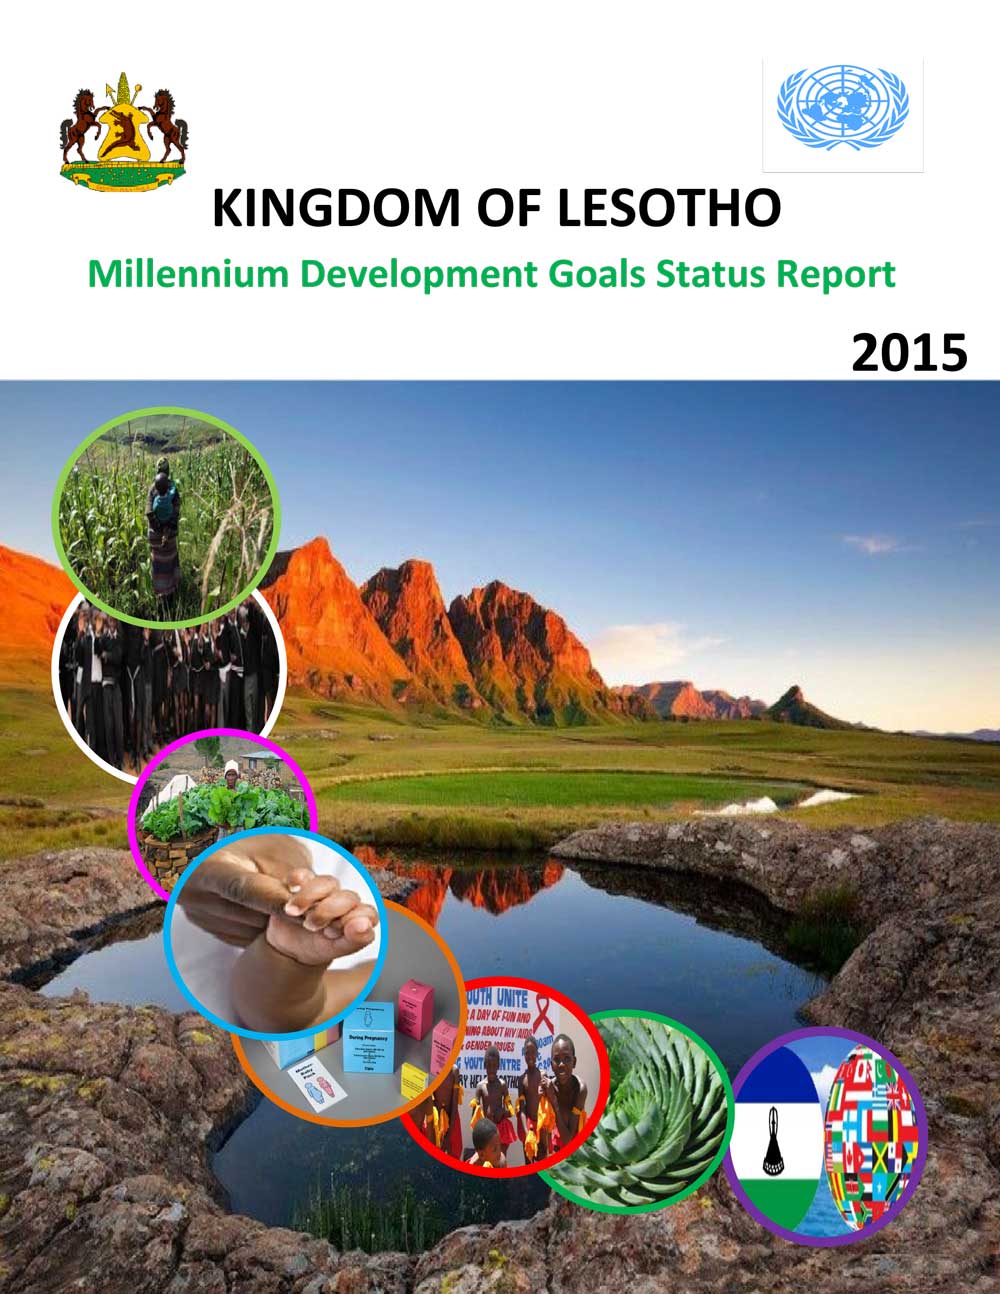 The Lesotho 2015 Millennium Development Goals Report